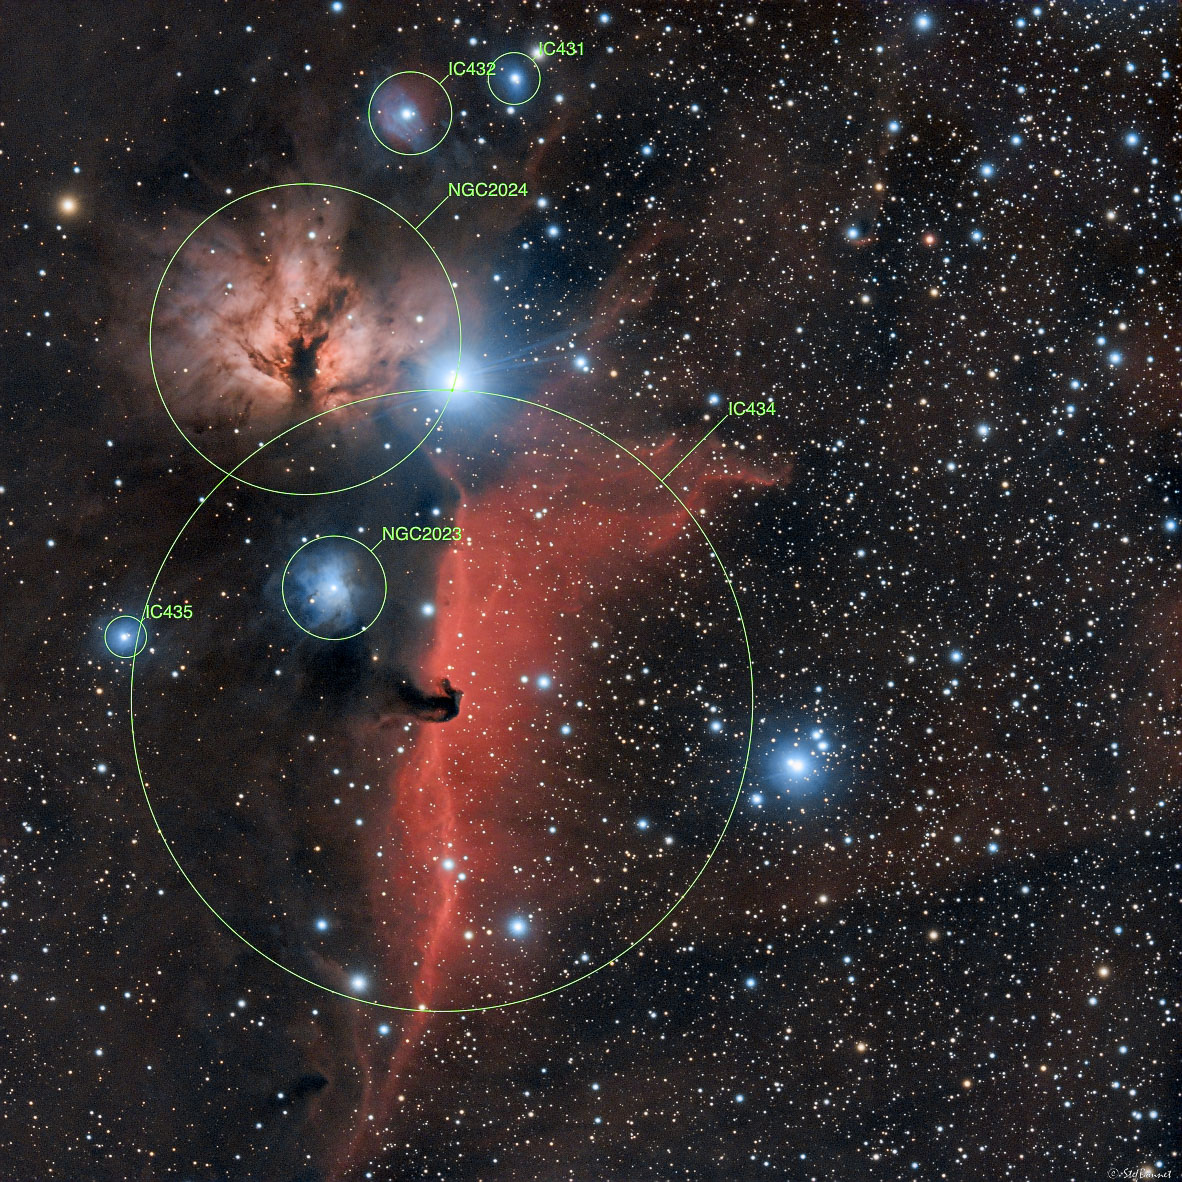 63b1c5bcc877c_20221127IC434TetedeCheval-NGC2024Flamme-Annotee.jpg.94a3492c07af68f811c34964872ca3db.jpg